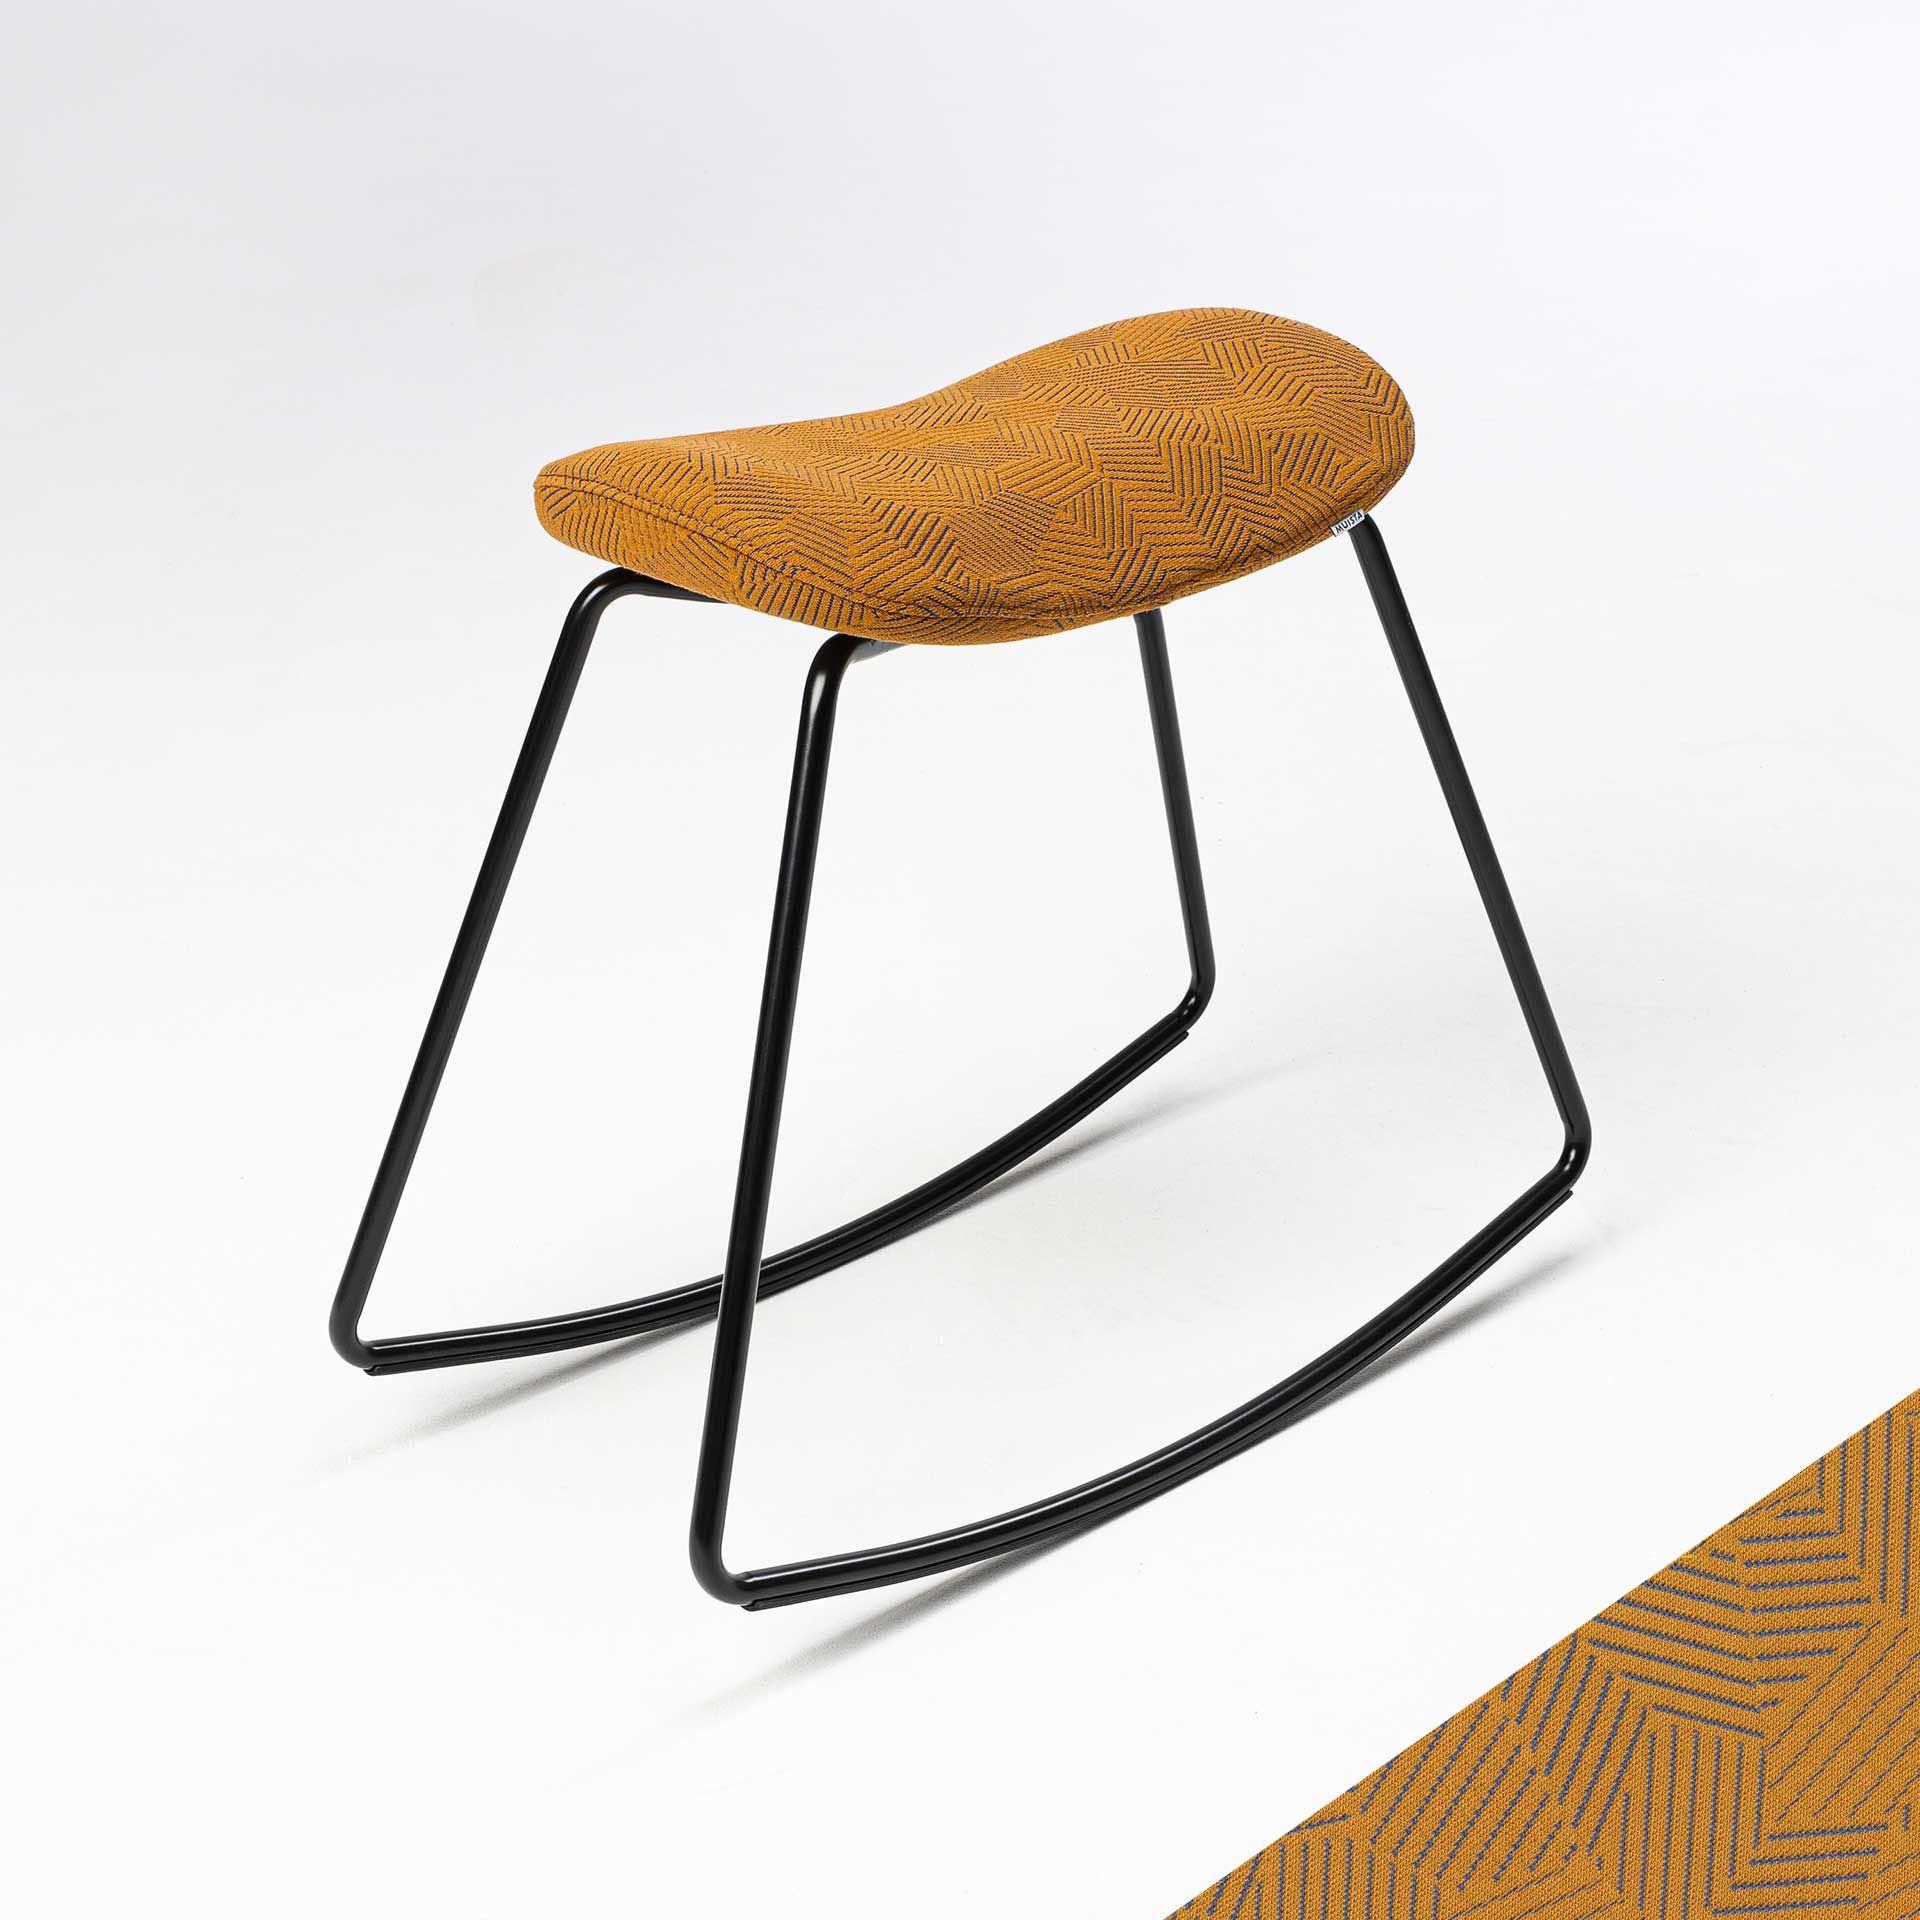 Jojiko-chair / DazzleBrown black